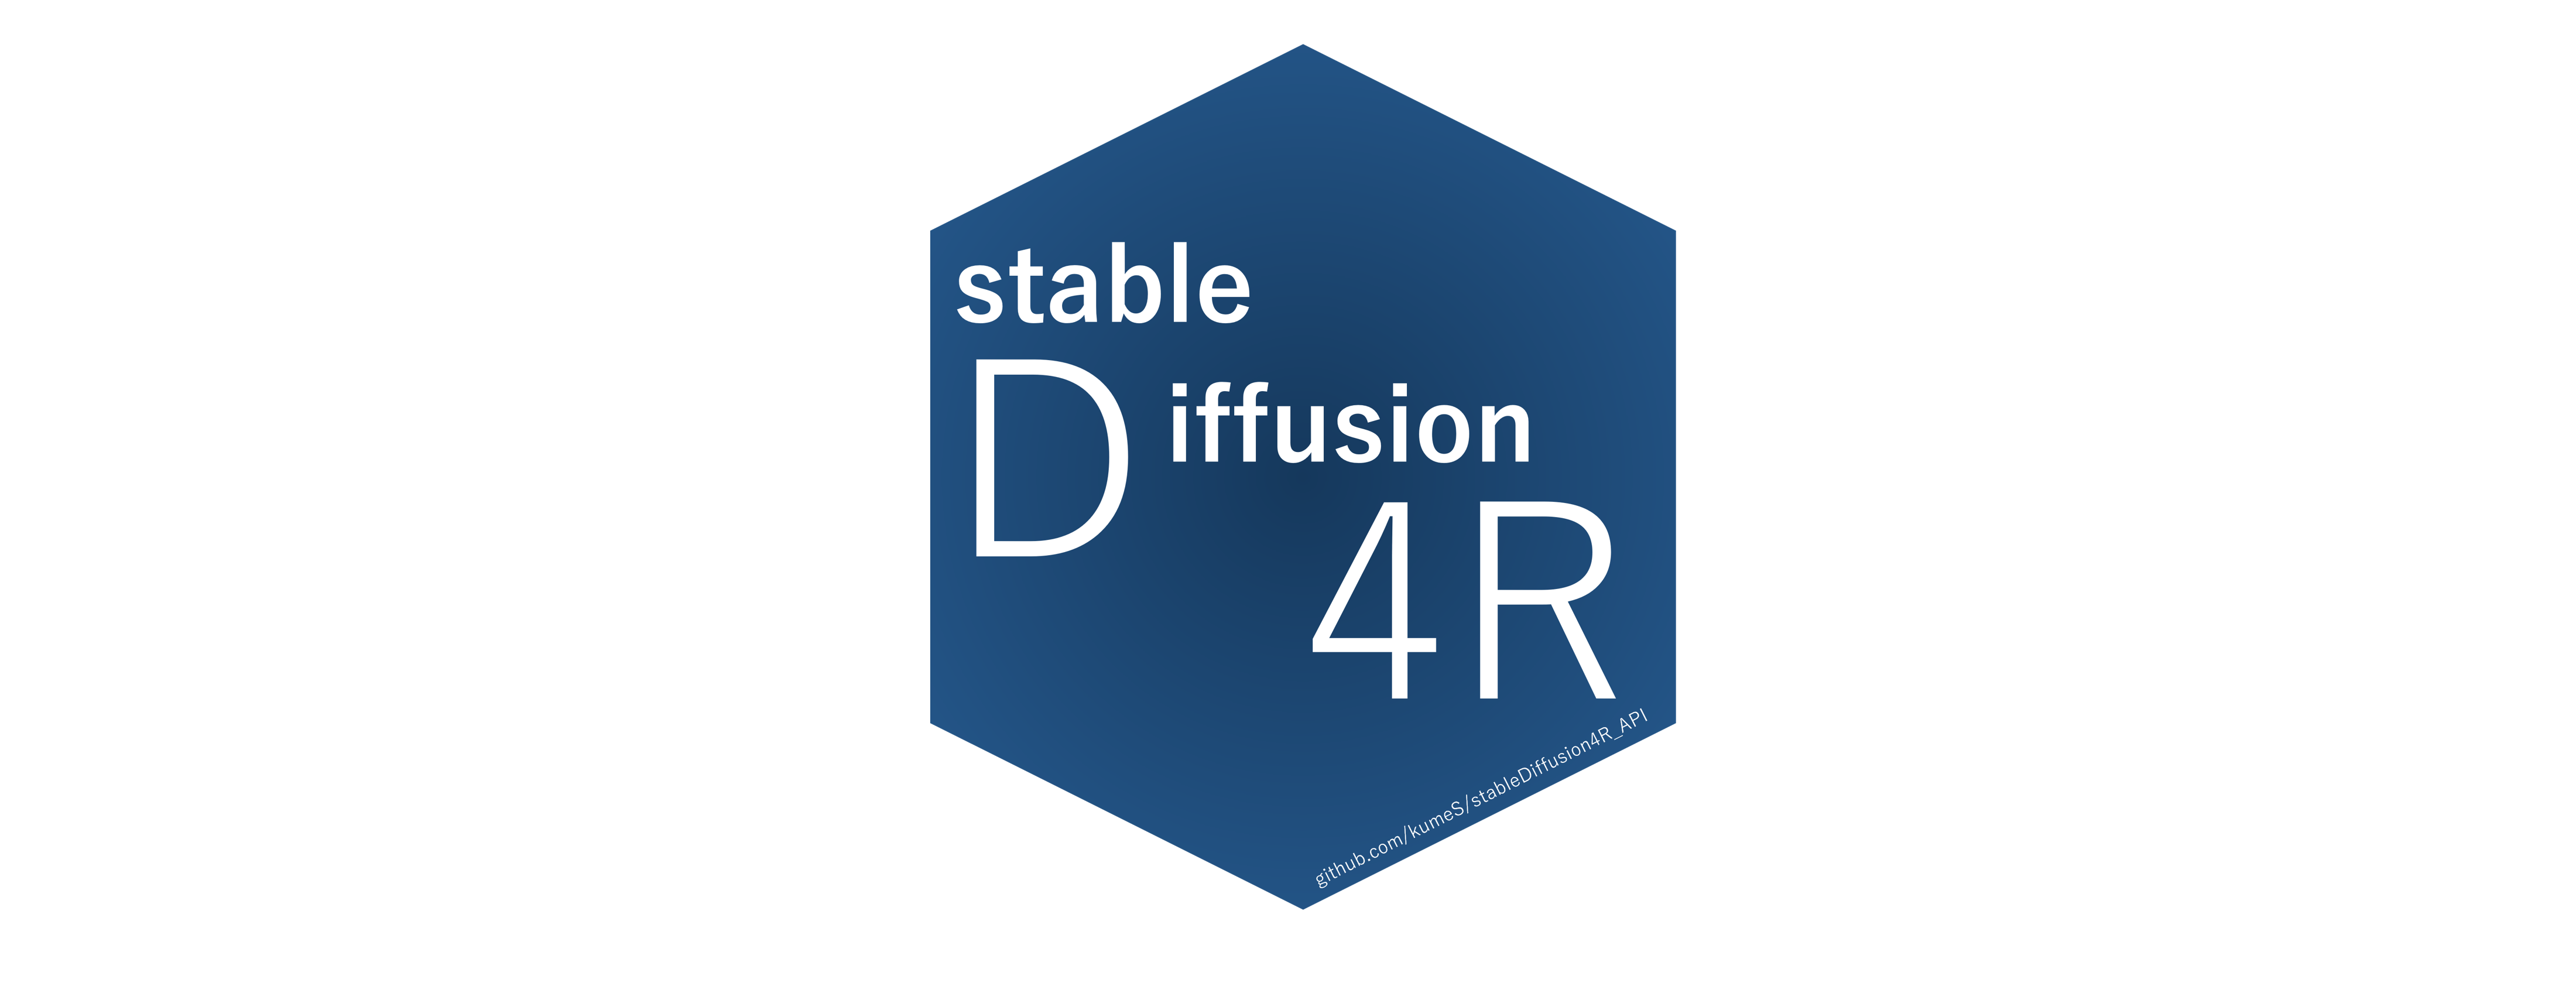 stableDiffusion4R